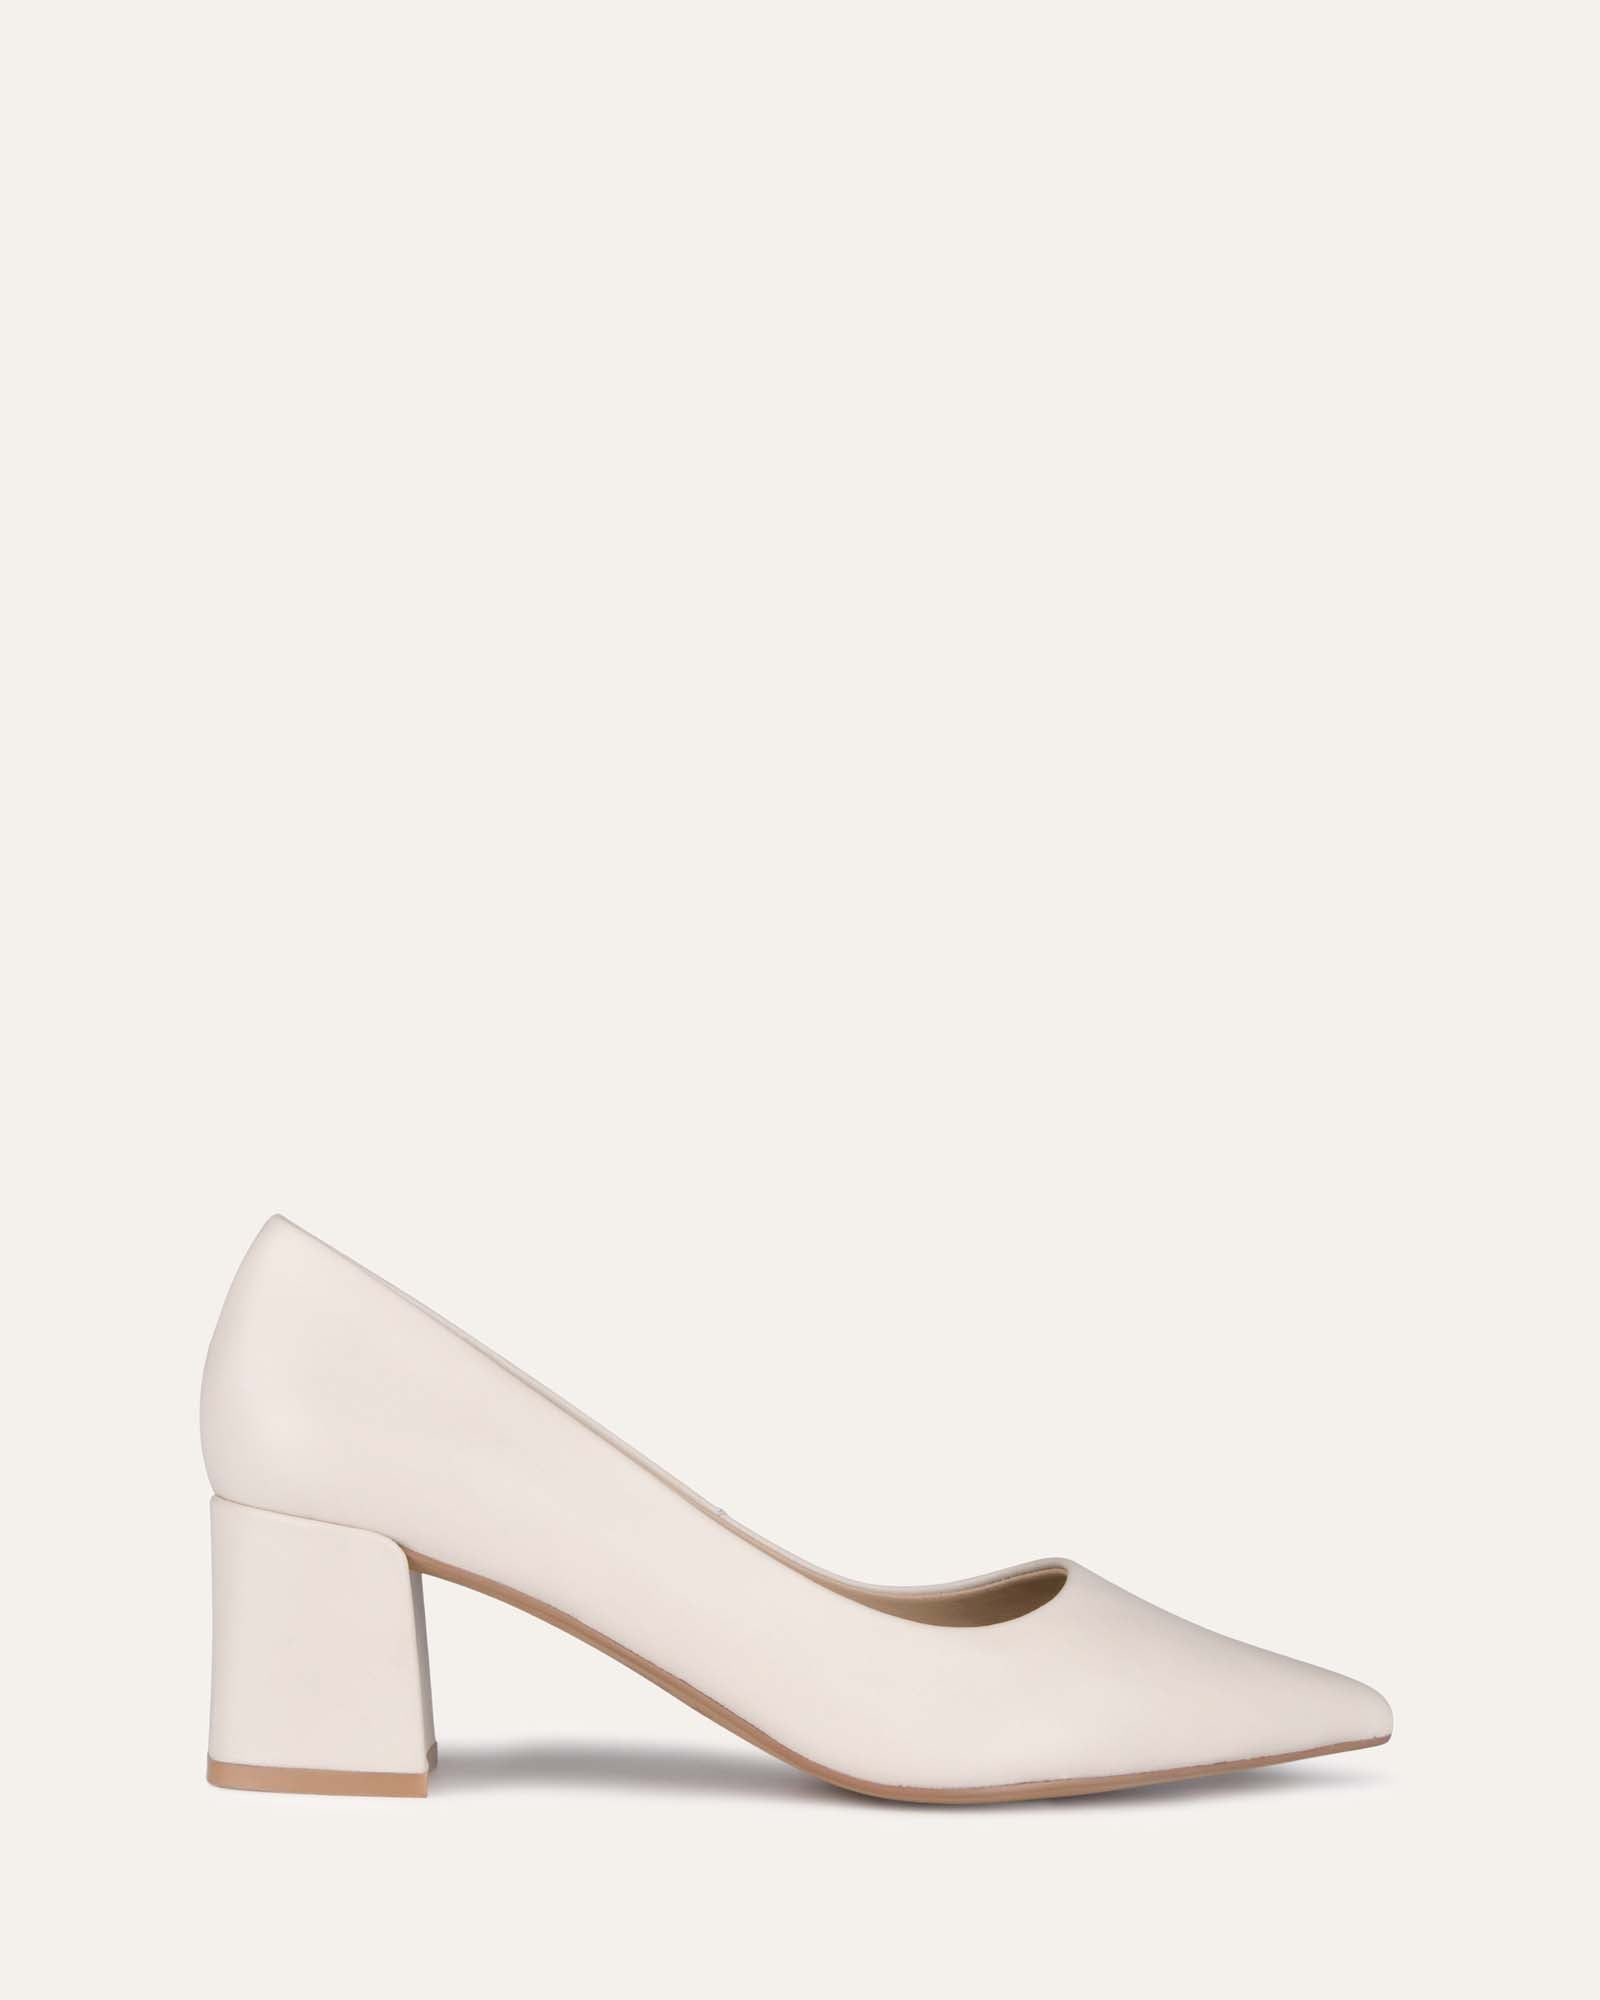 ASOS DESIGN Nash strappy tie leg heeled sandals in off white | ASOS